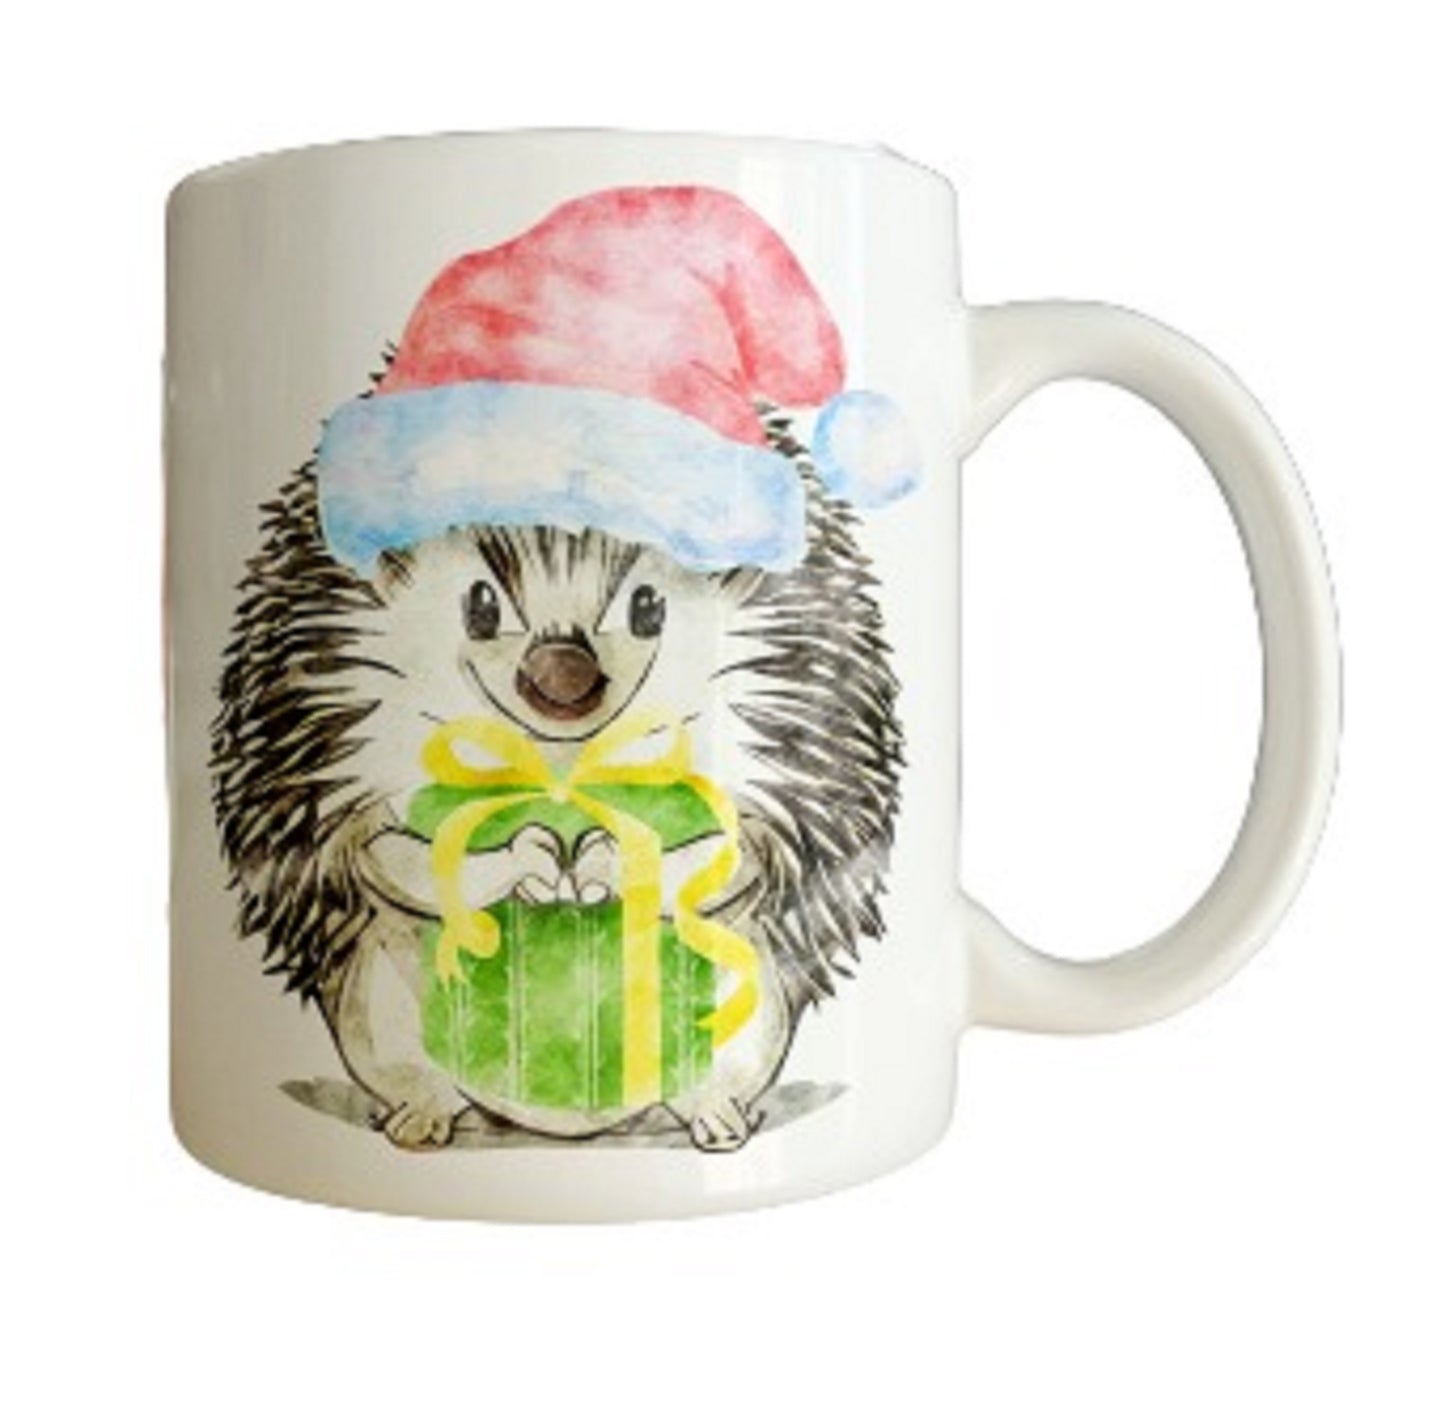  Christmas Hedgehog Holding a Present Mug by Free Spirit Accessories sold by Free Spirit Accessories